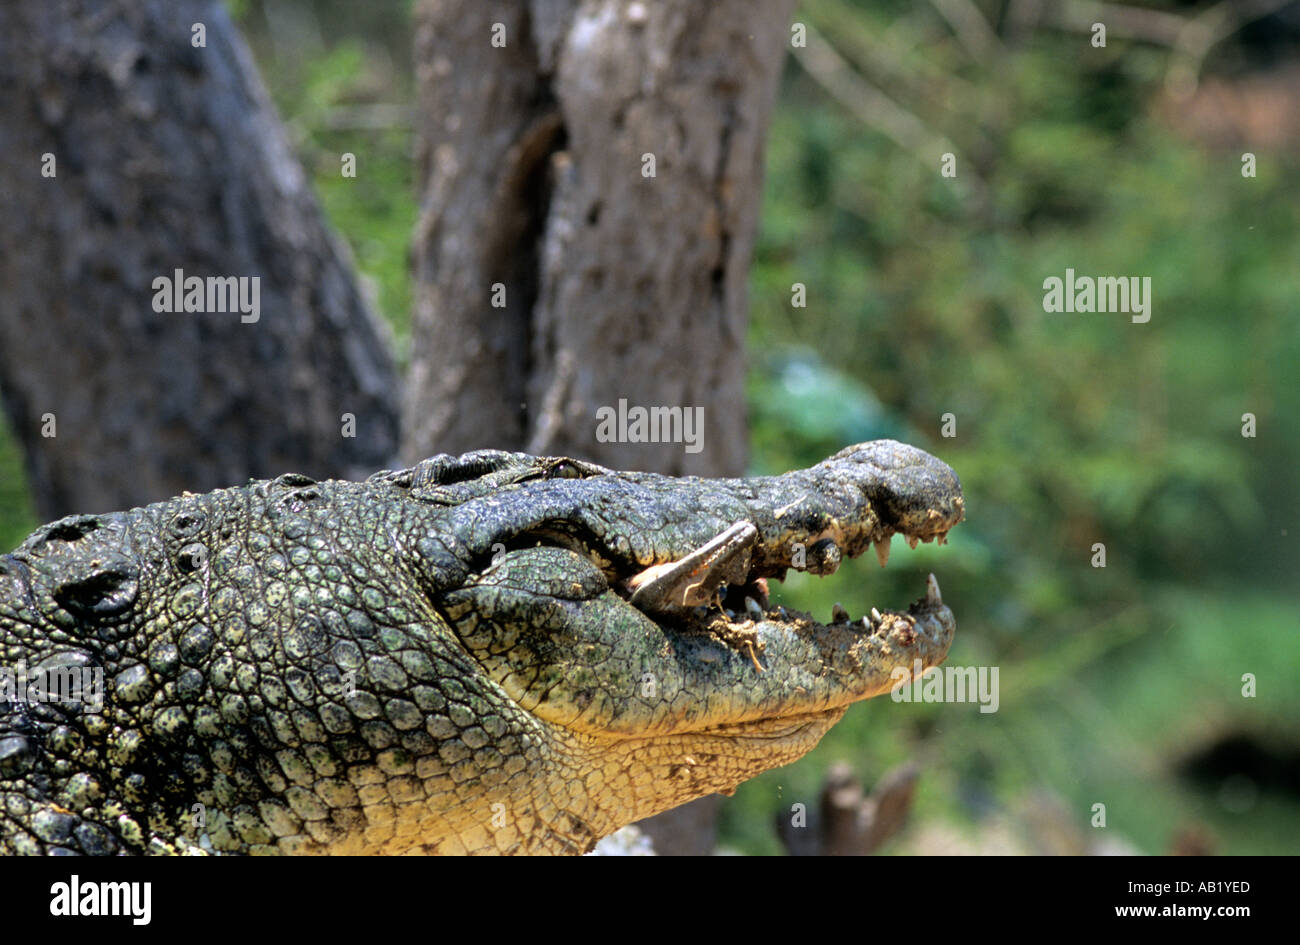 Zambia Maze island croc eating from side, lake Kariba crocodile Stock Photo  - Alamy